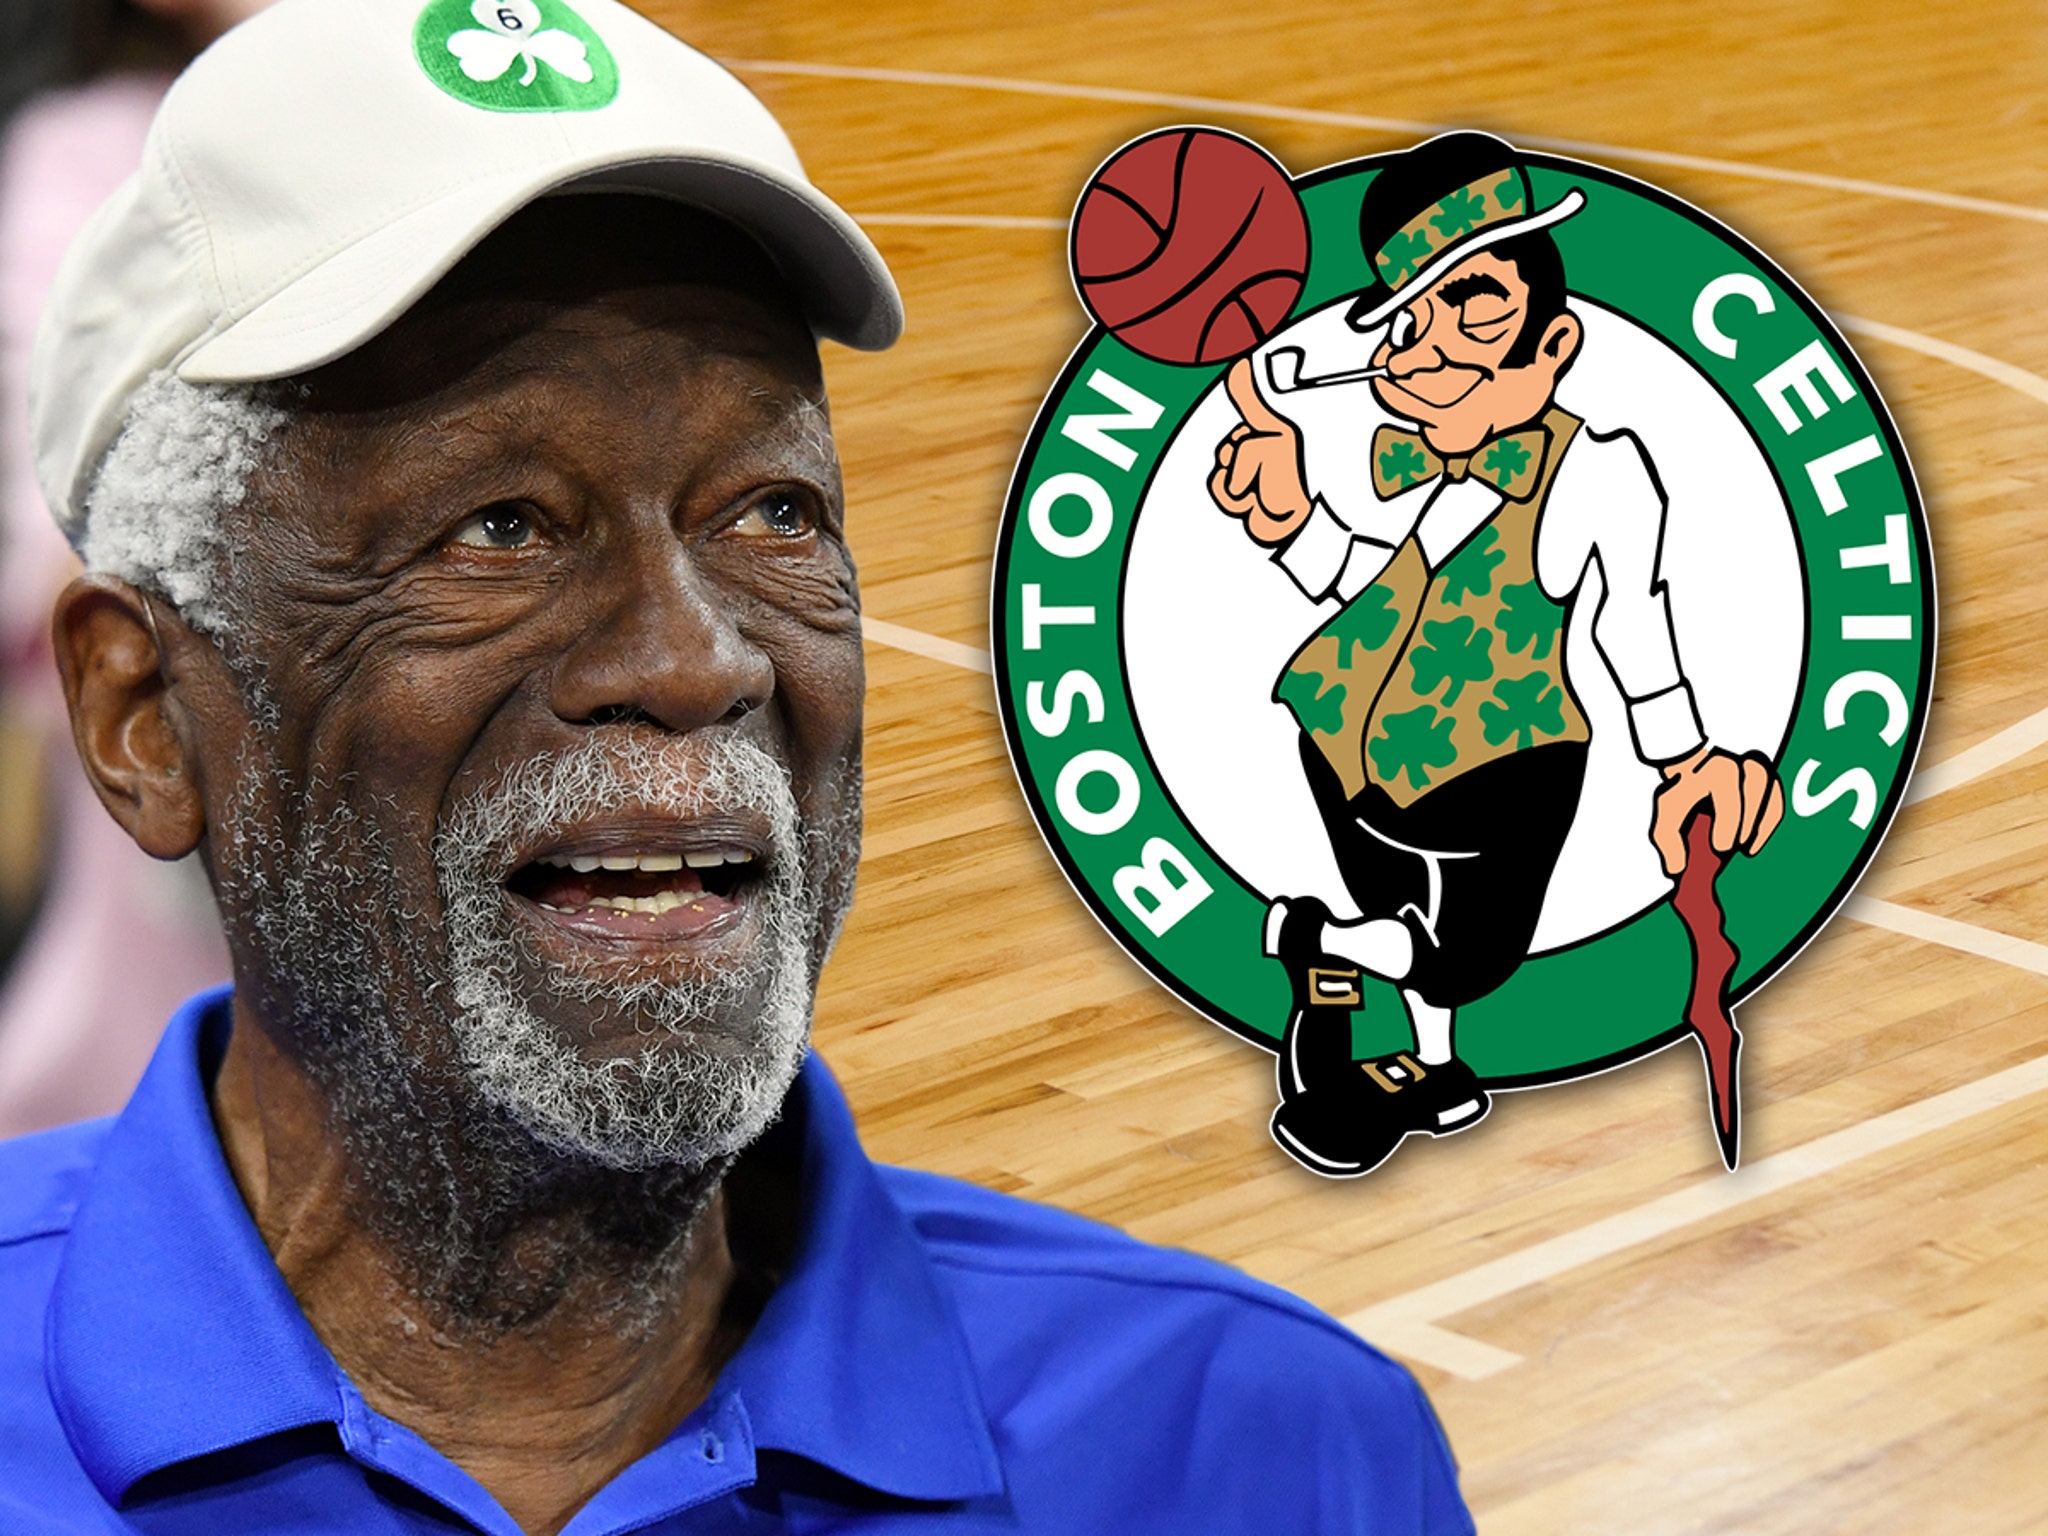 Celtics unveil City Edition uniforms honoring Bill Russell - CBS Boston